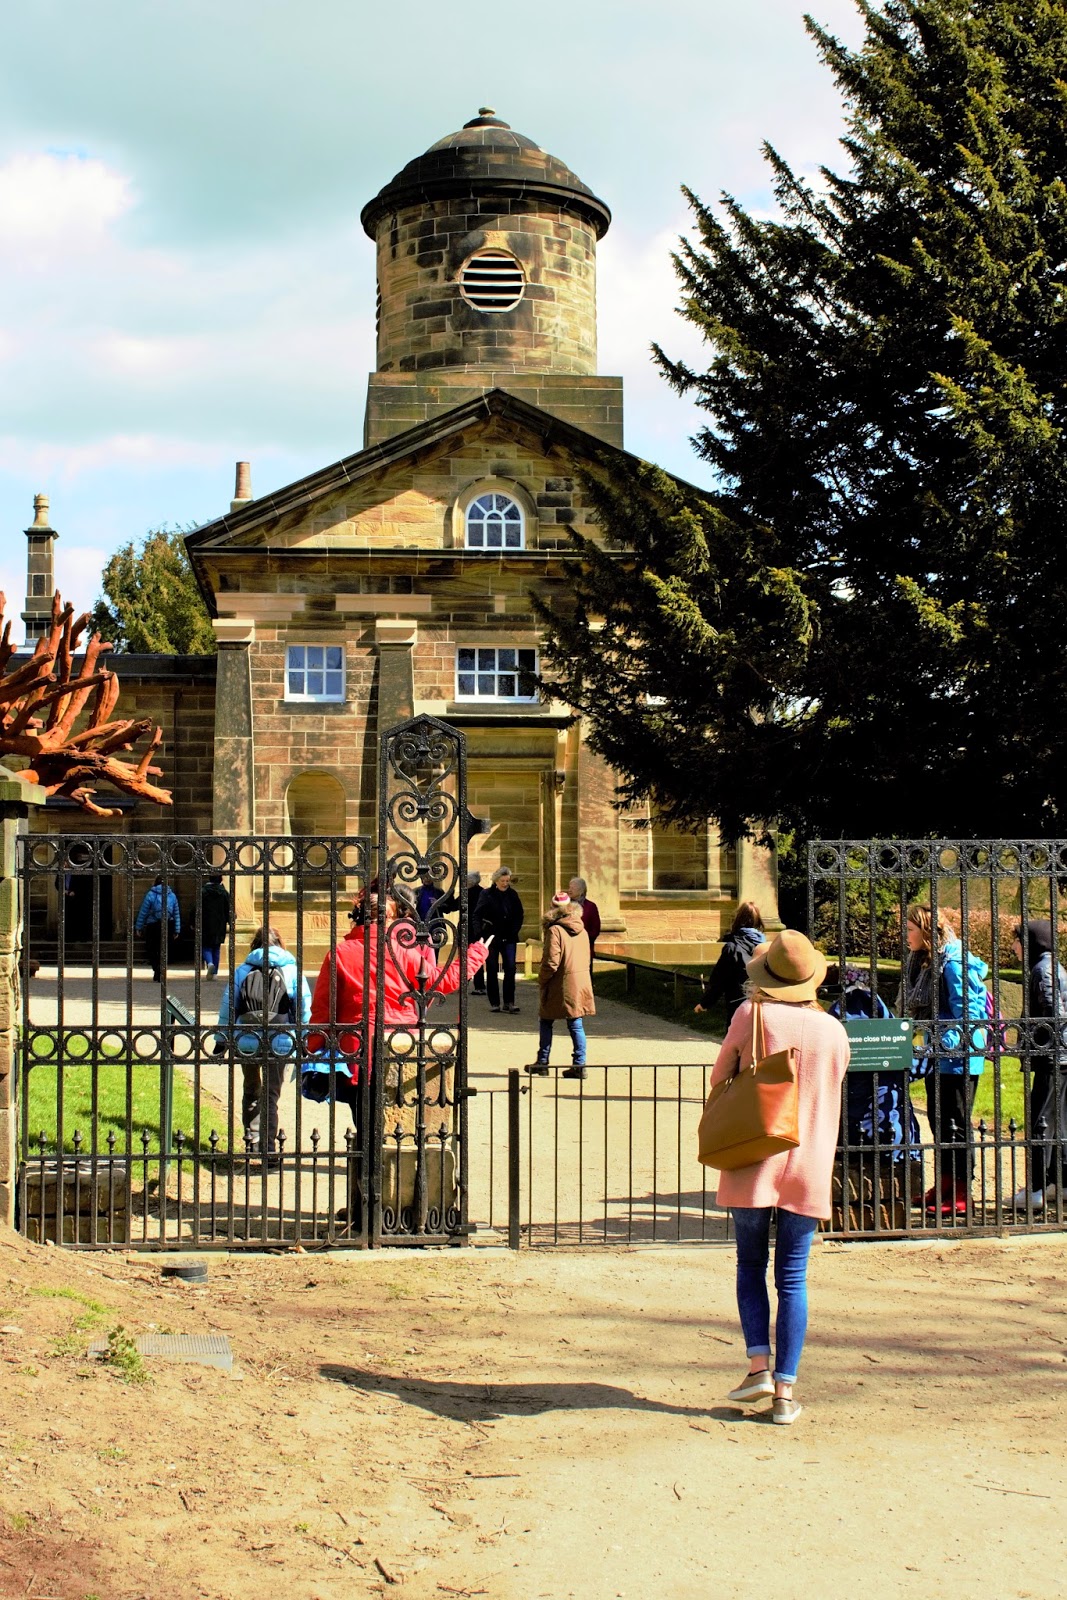 Chapel at the Yorkshire Sculpture Park